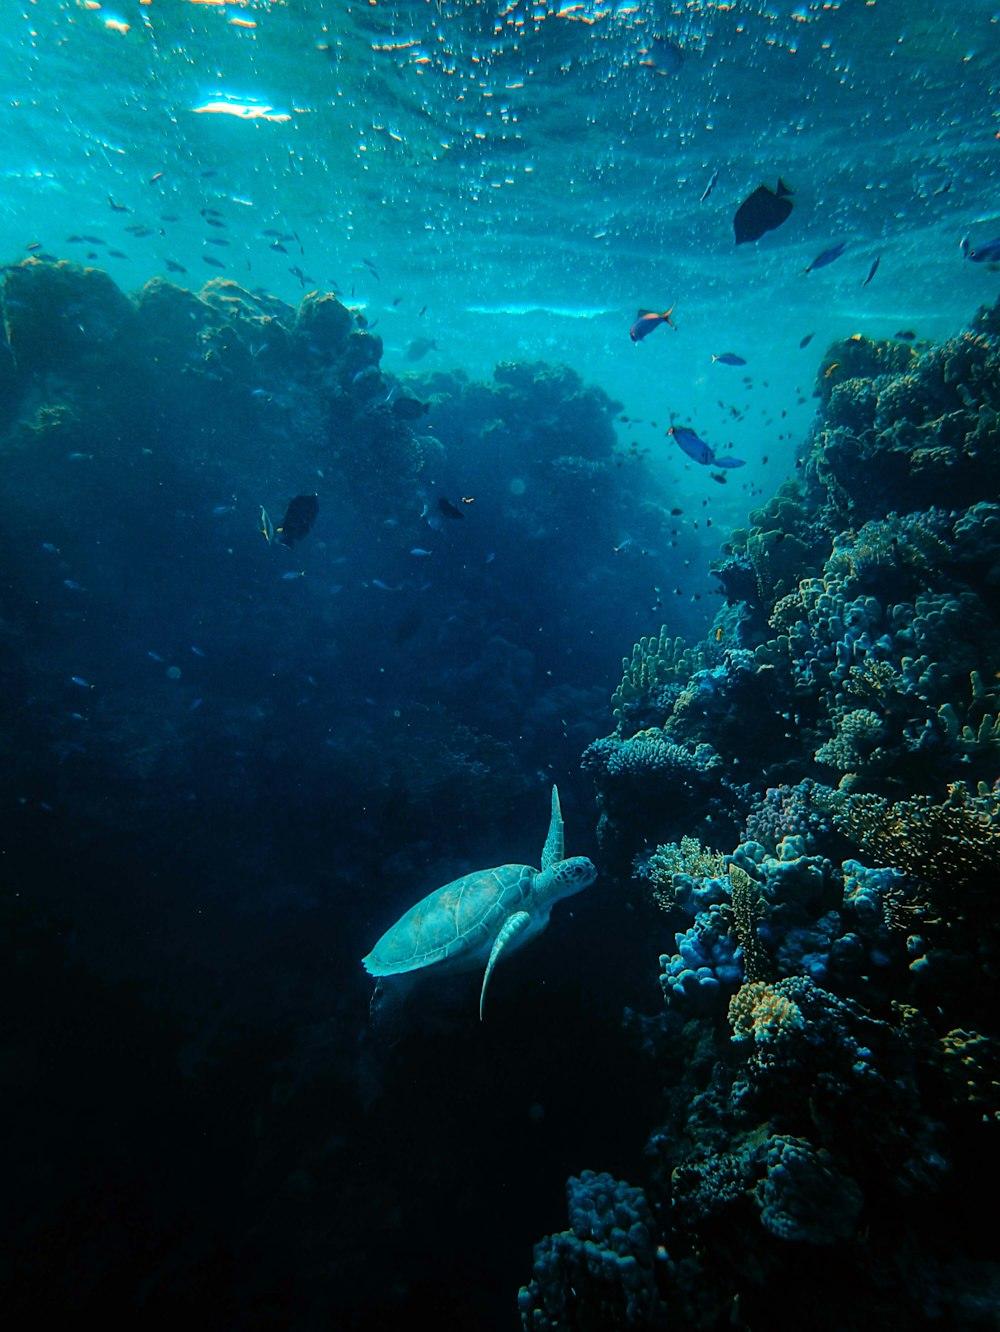 Ocean Fish Pictures Image